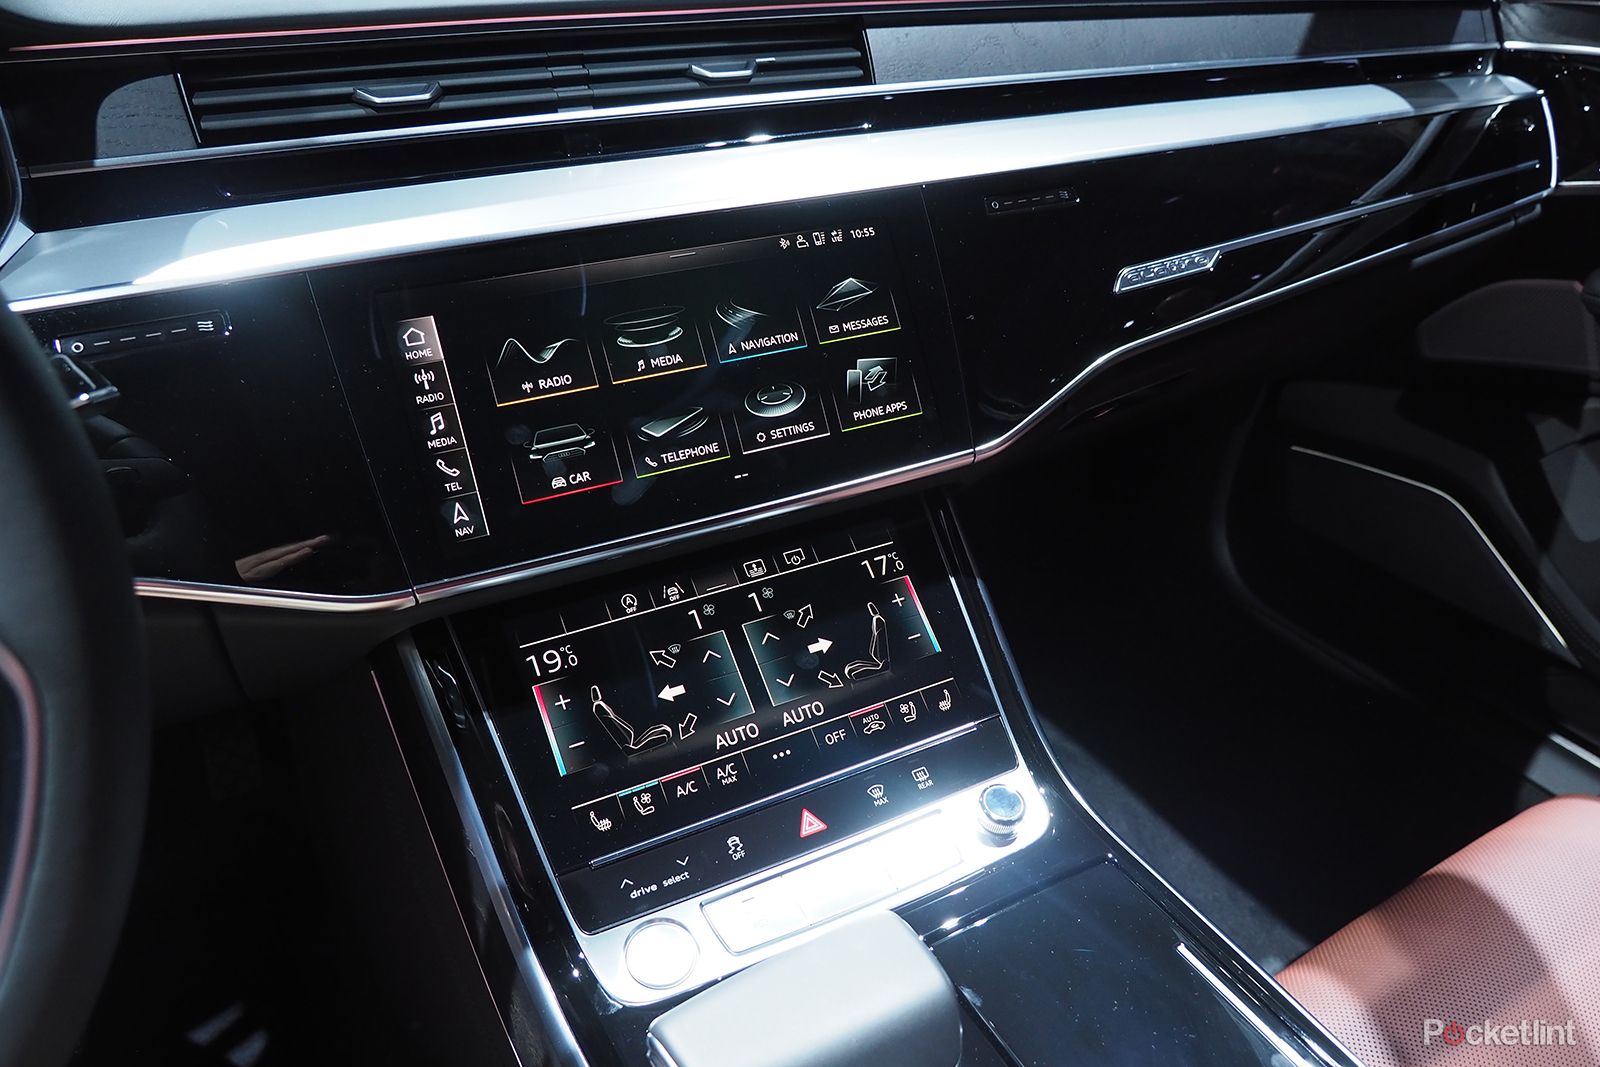 Audi A8 interior image 1